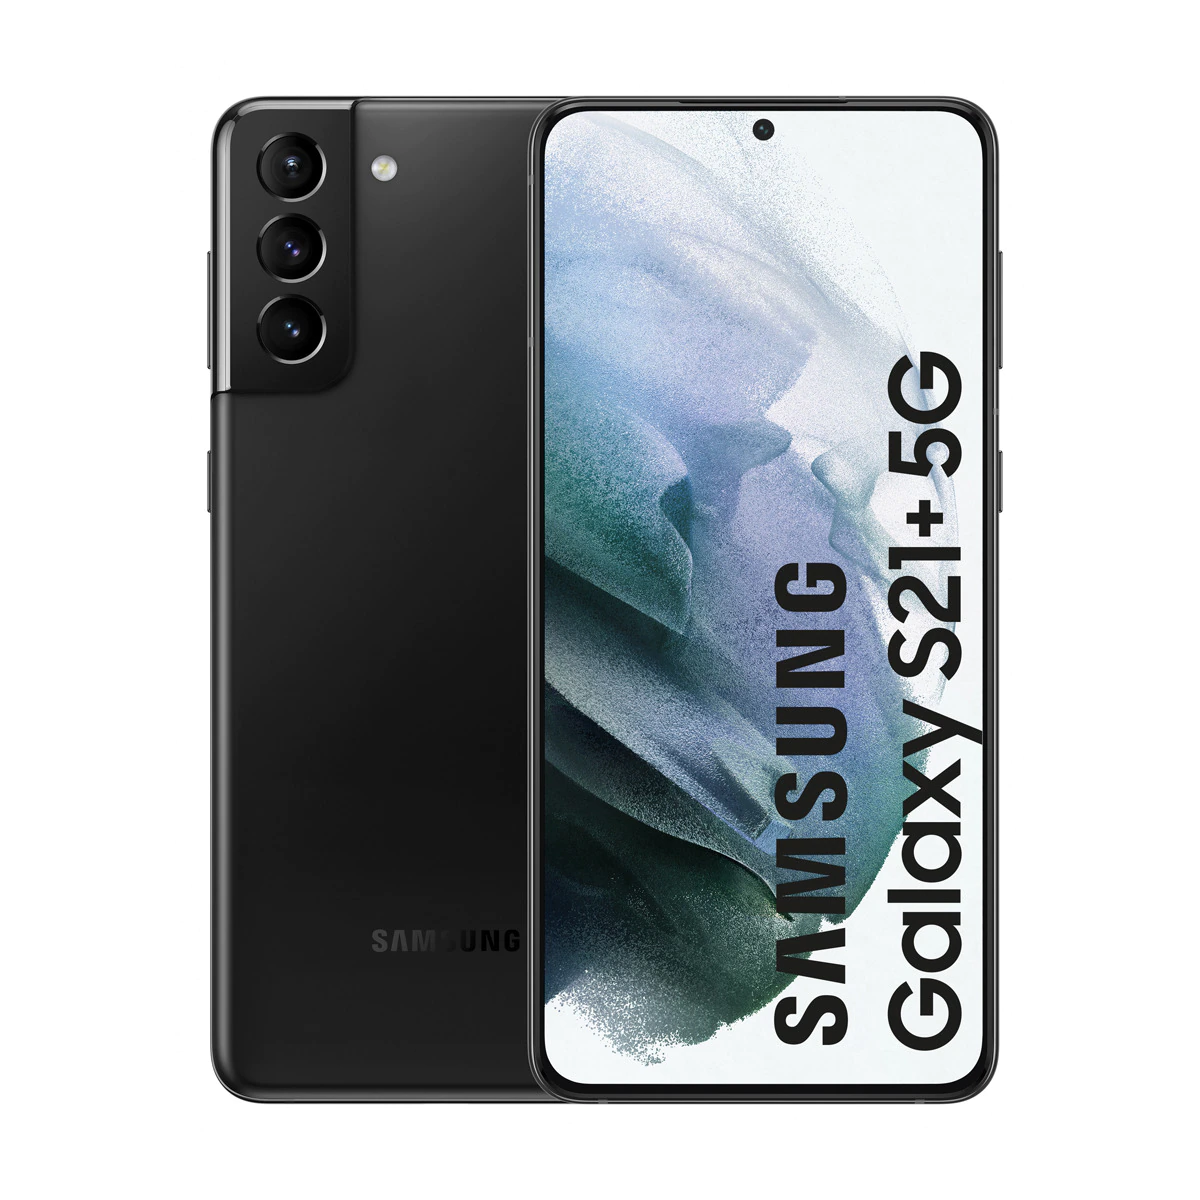 Samsung Galaxy S21+ 5G 8 GB + 256 GB negro móvil libre